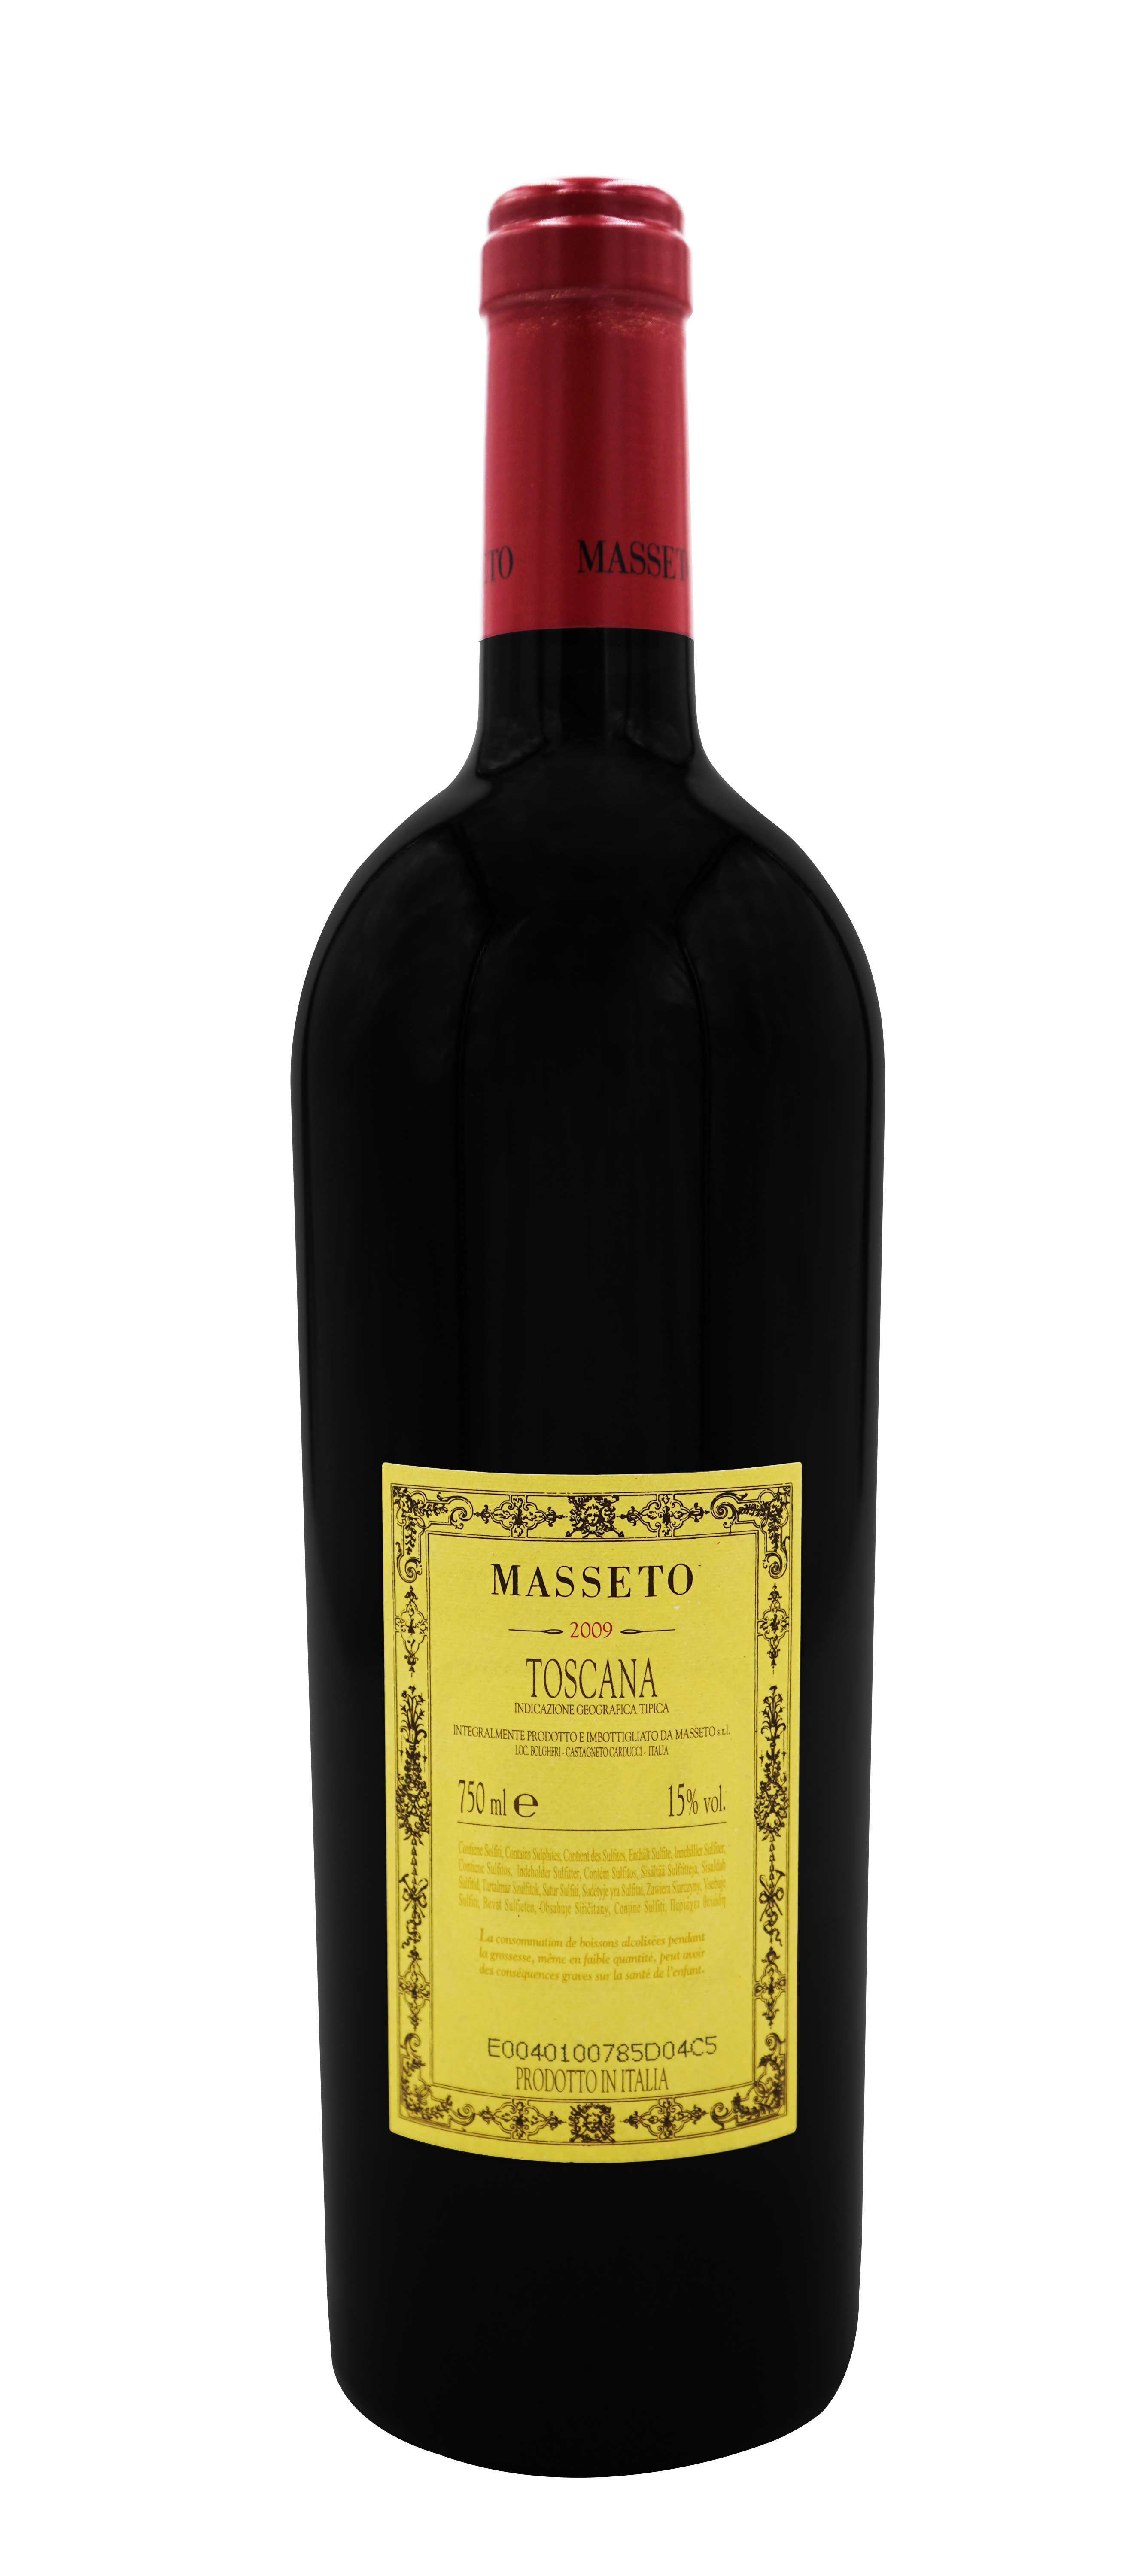 Masseto 2009 - back label